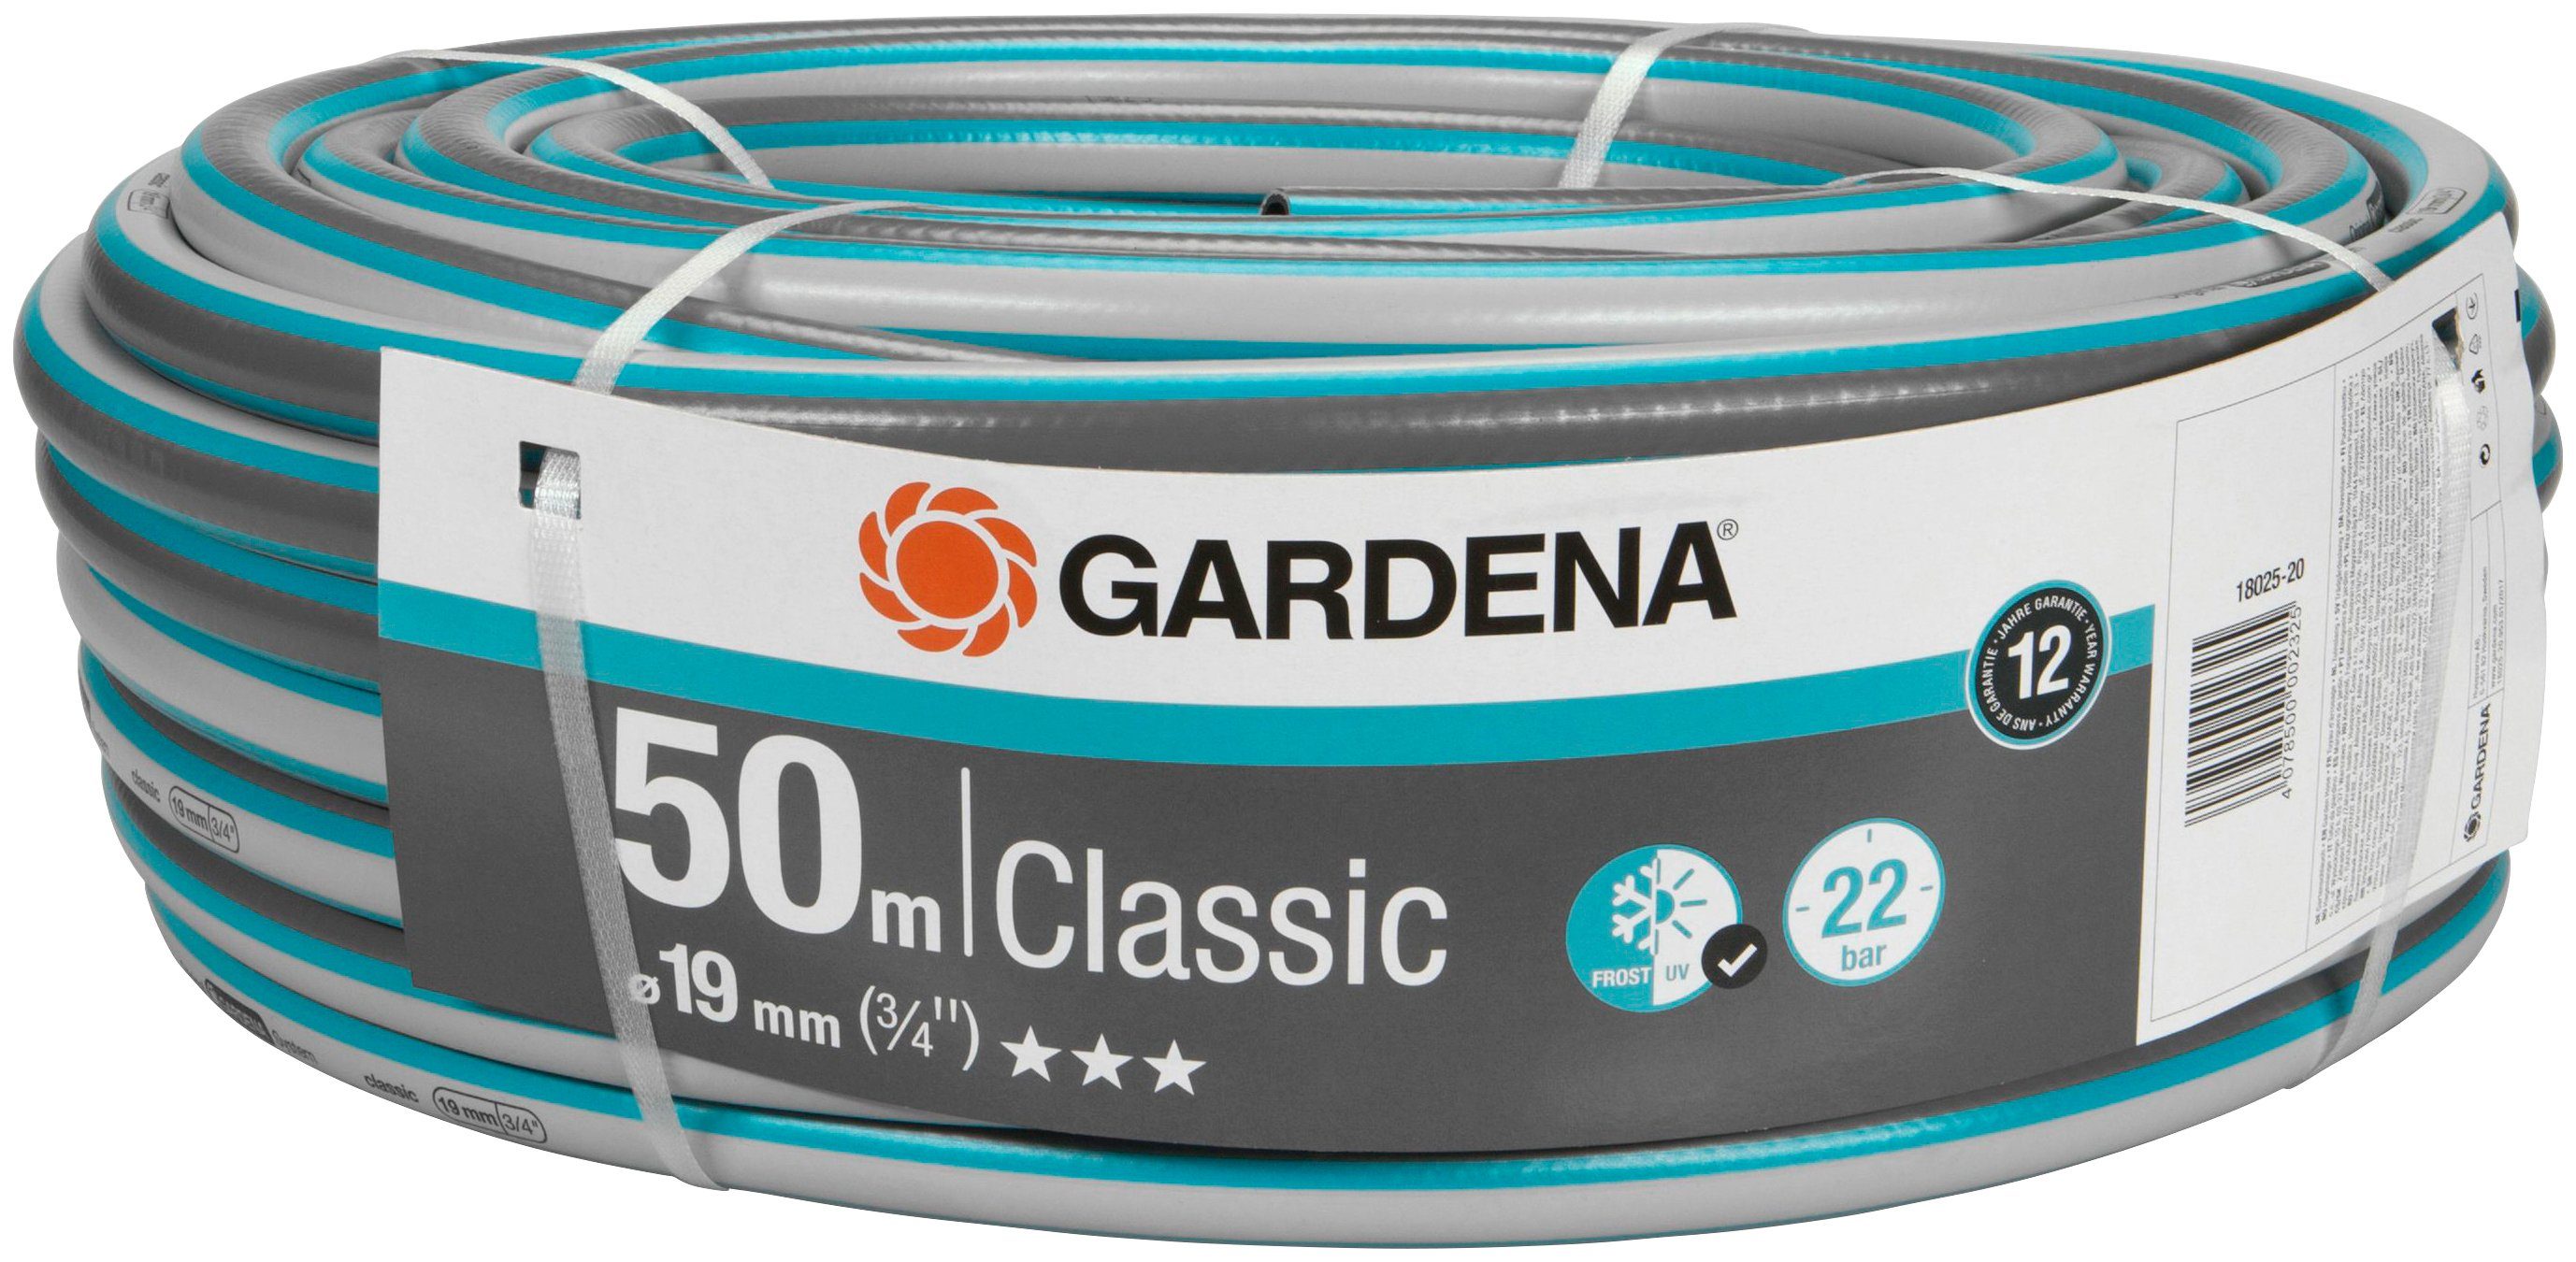 GARDENA Gartenschlauch Classic, 18025-20, 19 mm (3/4)